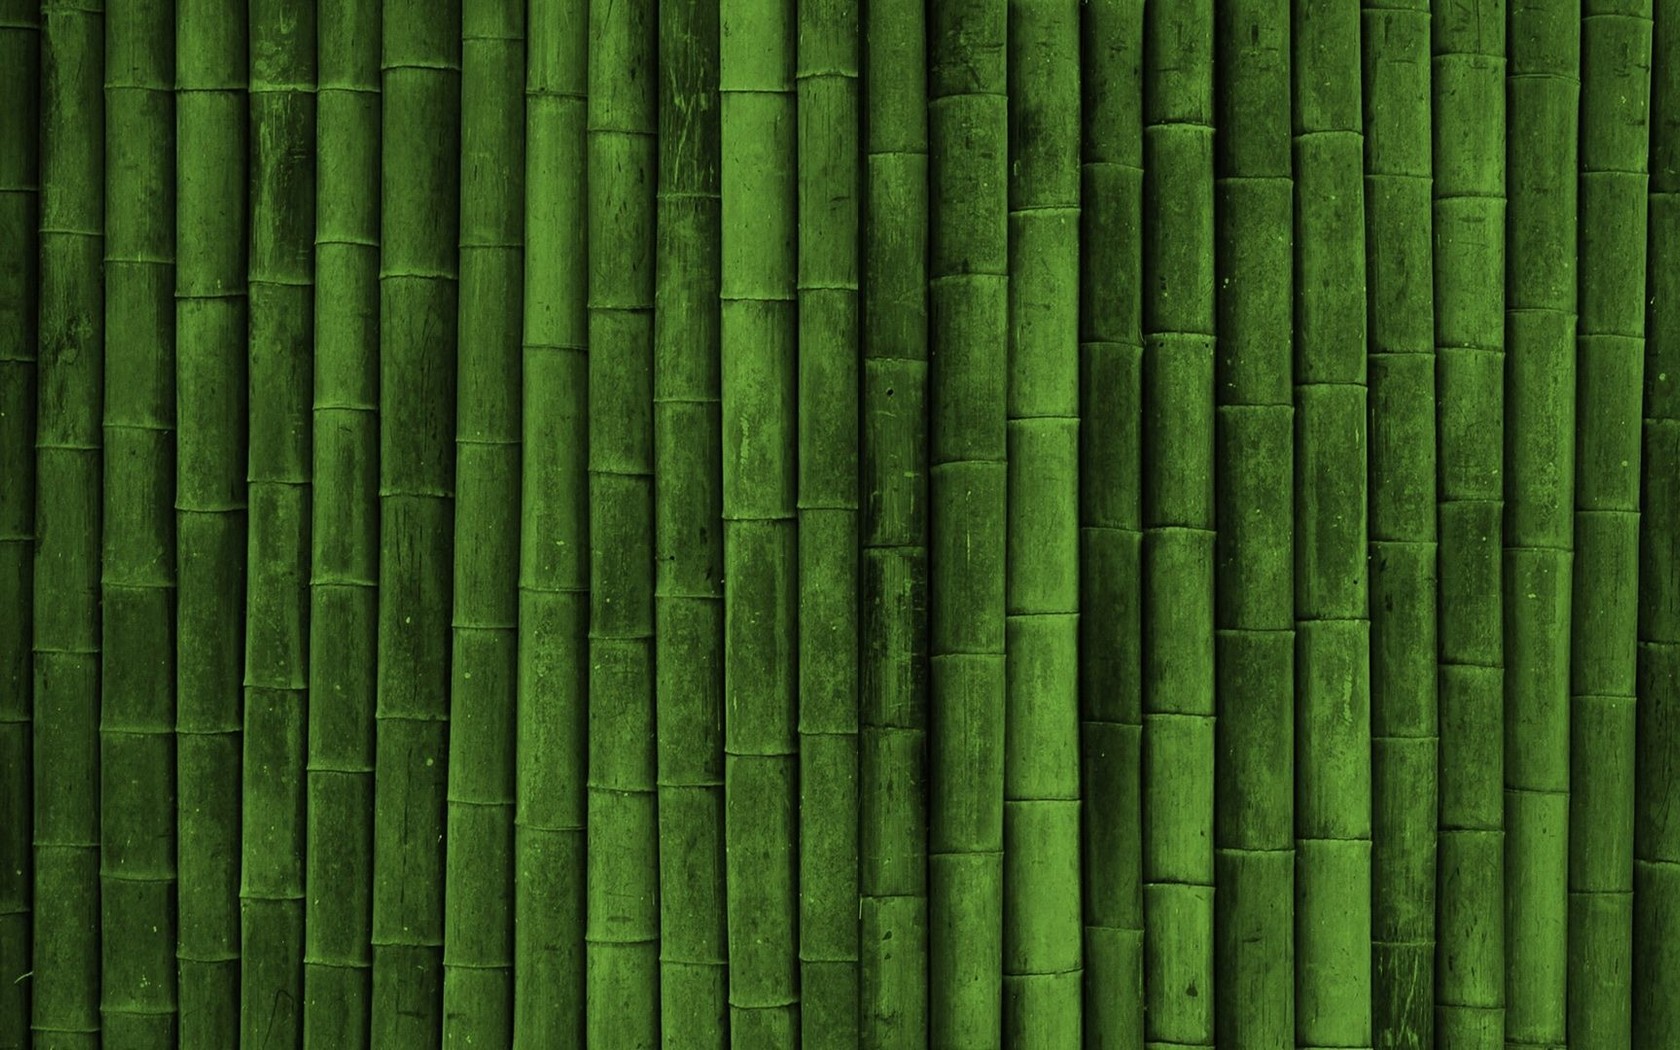 Bamboo Textures image